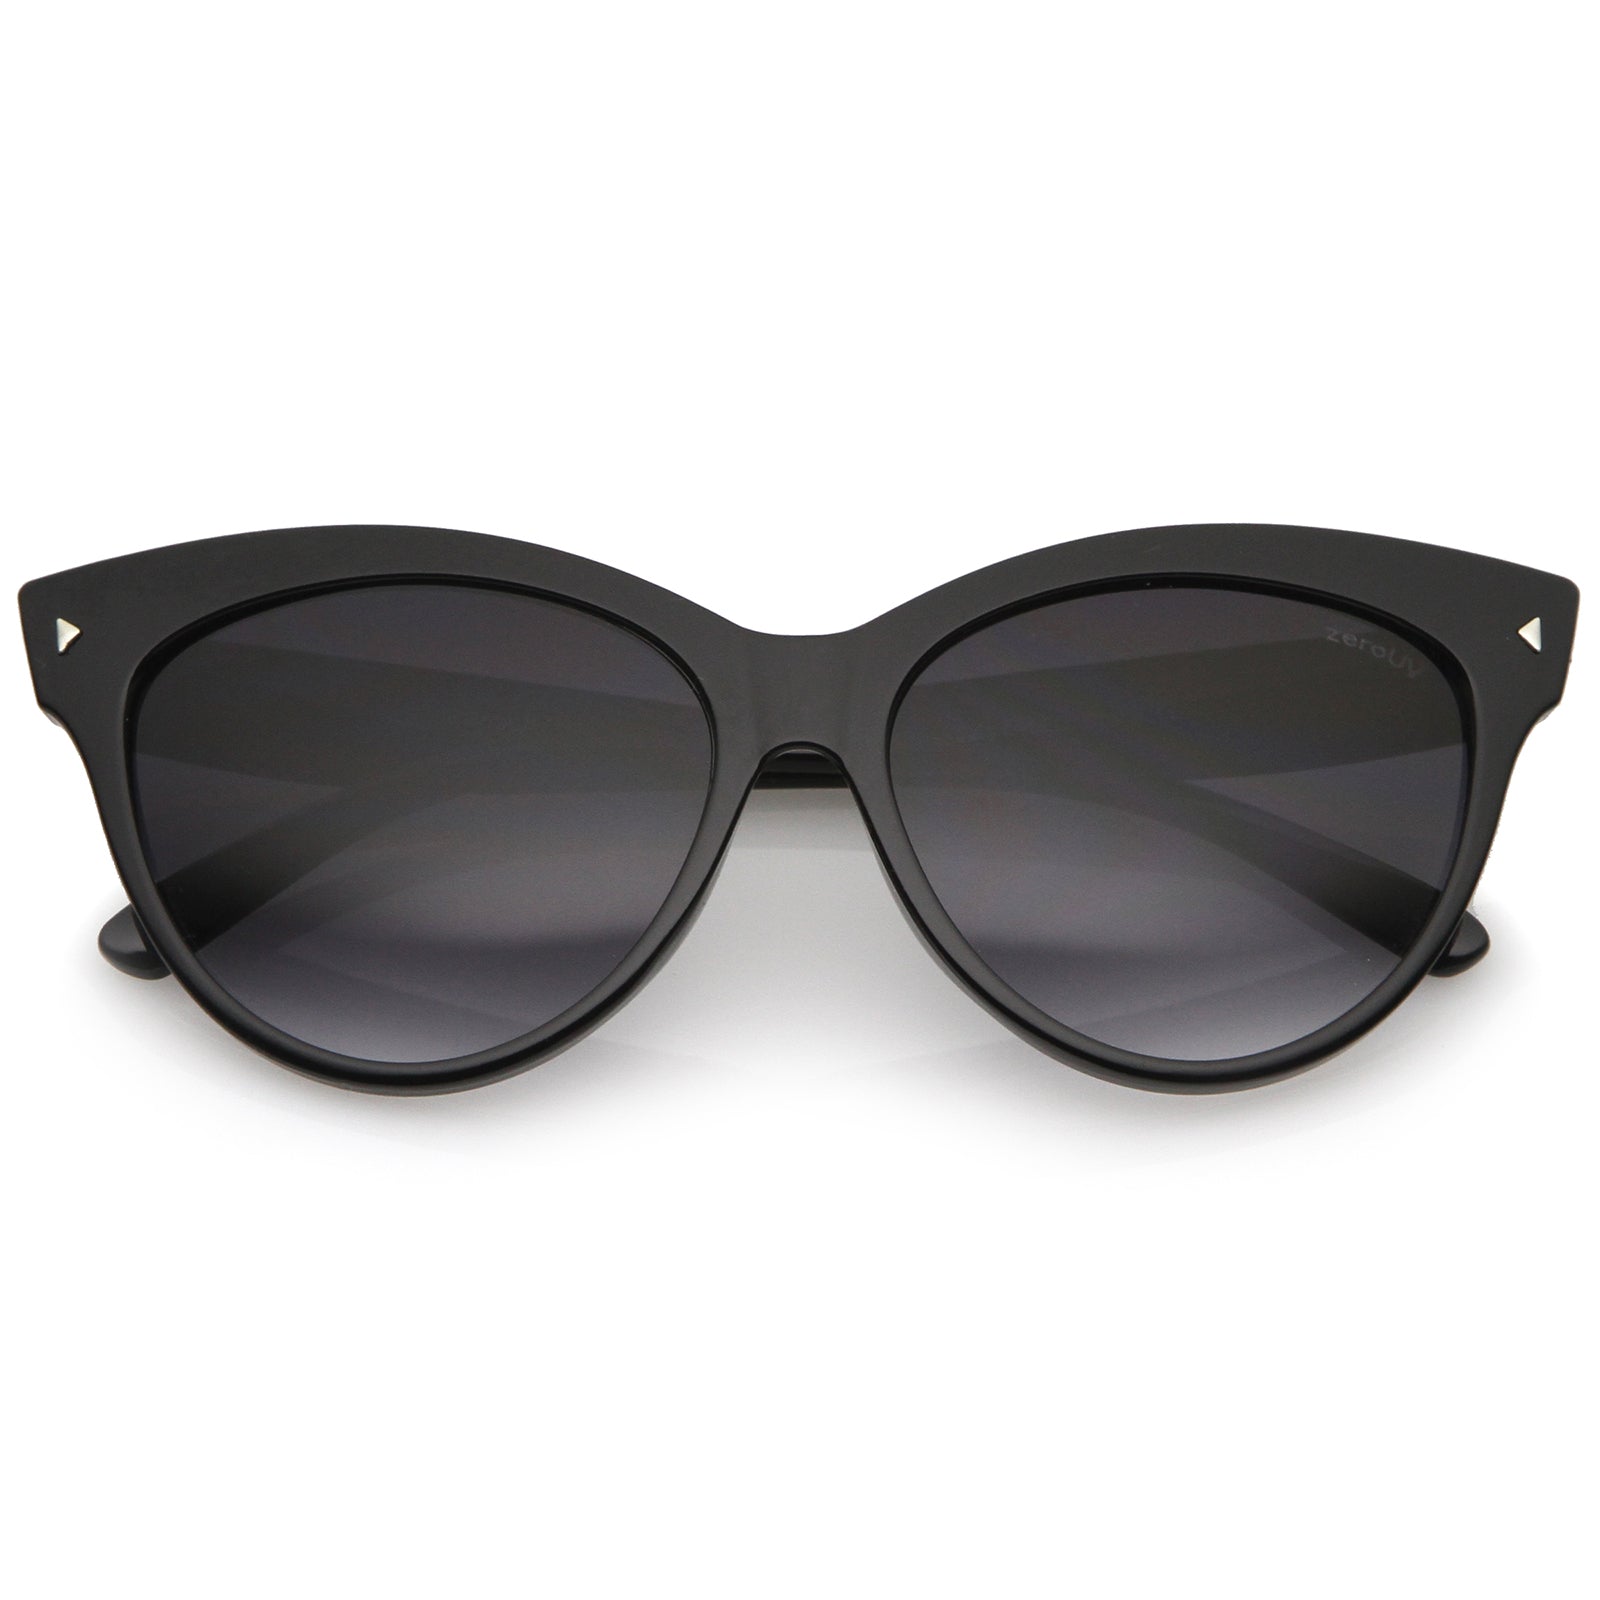 zeroUV - Cat Eye Sunglasses for Women Tagged retro